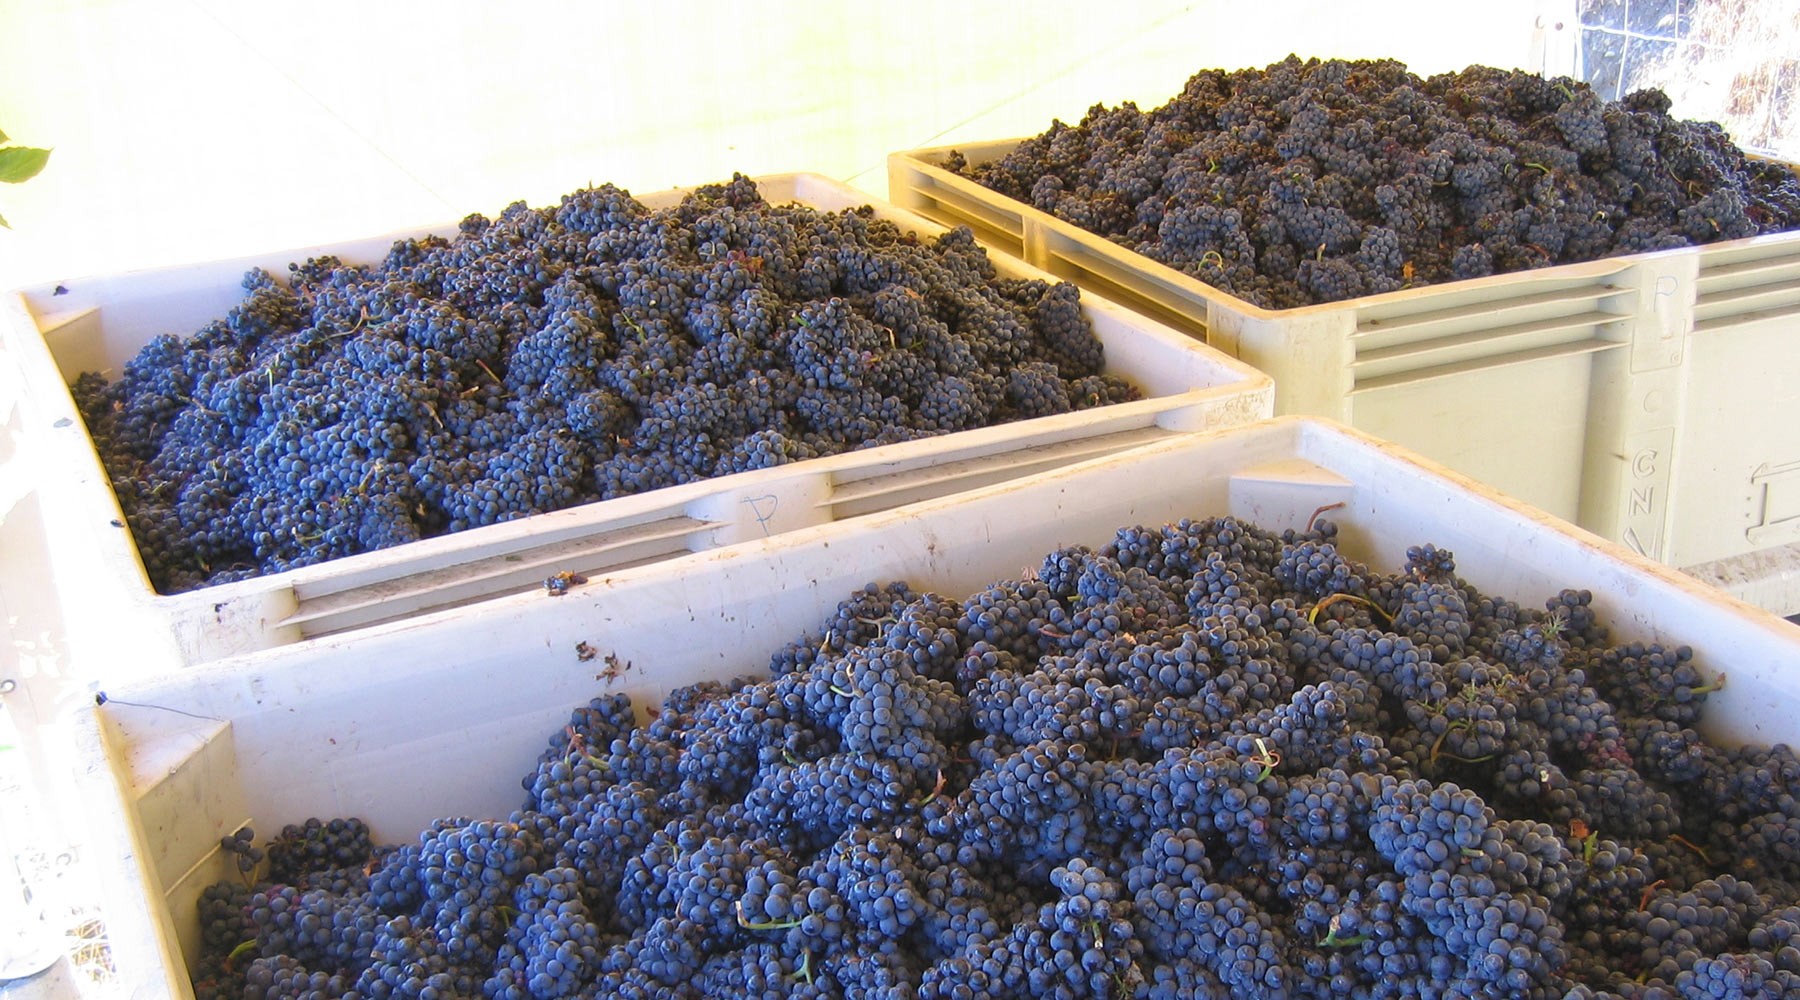 Pinot Noir grapes in bins